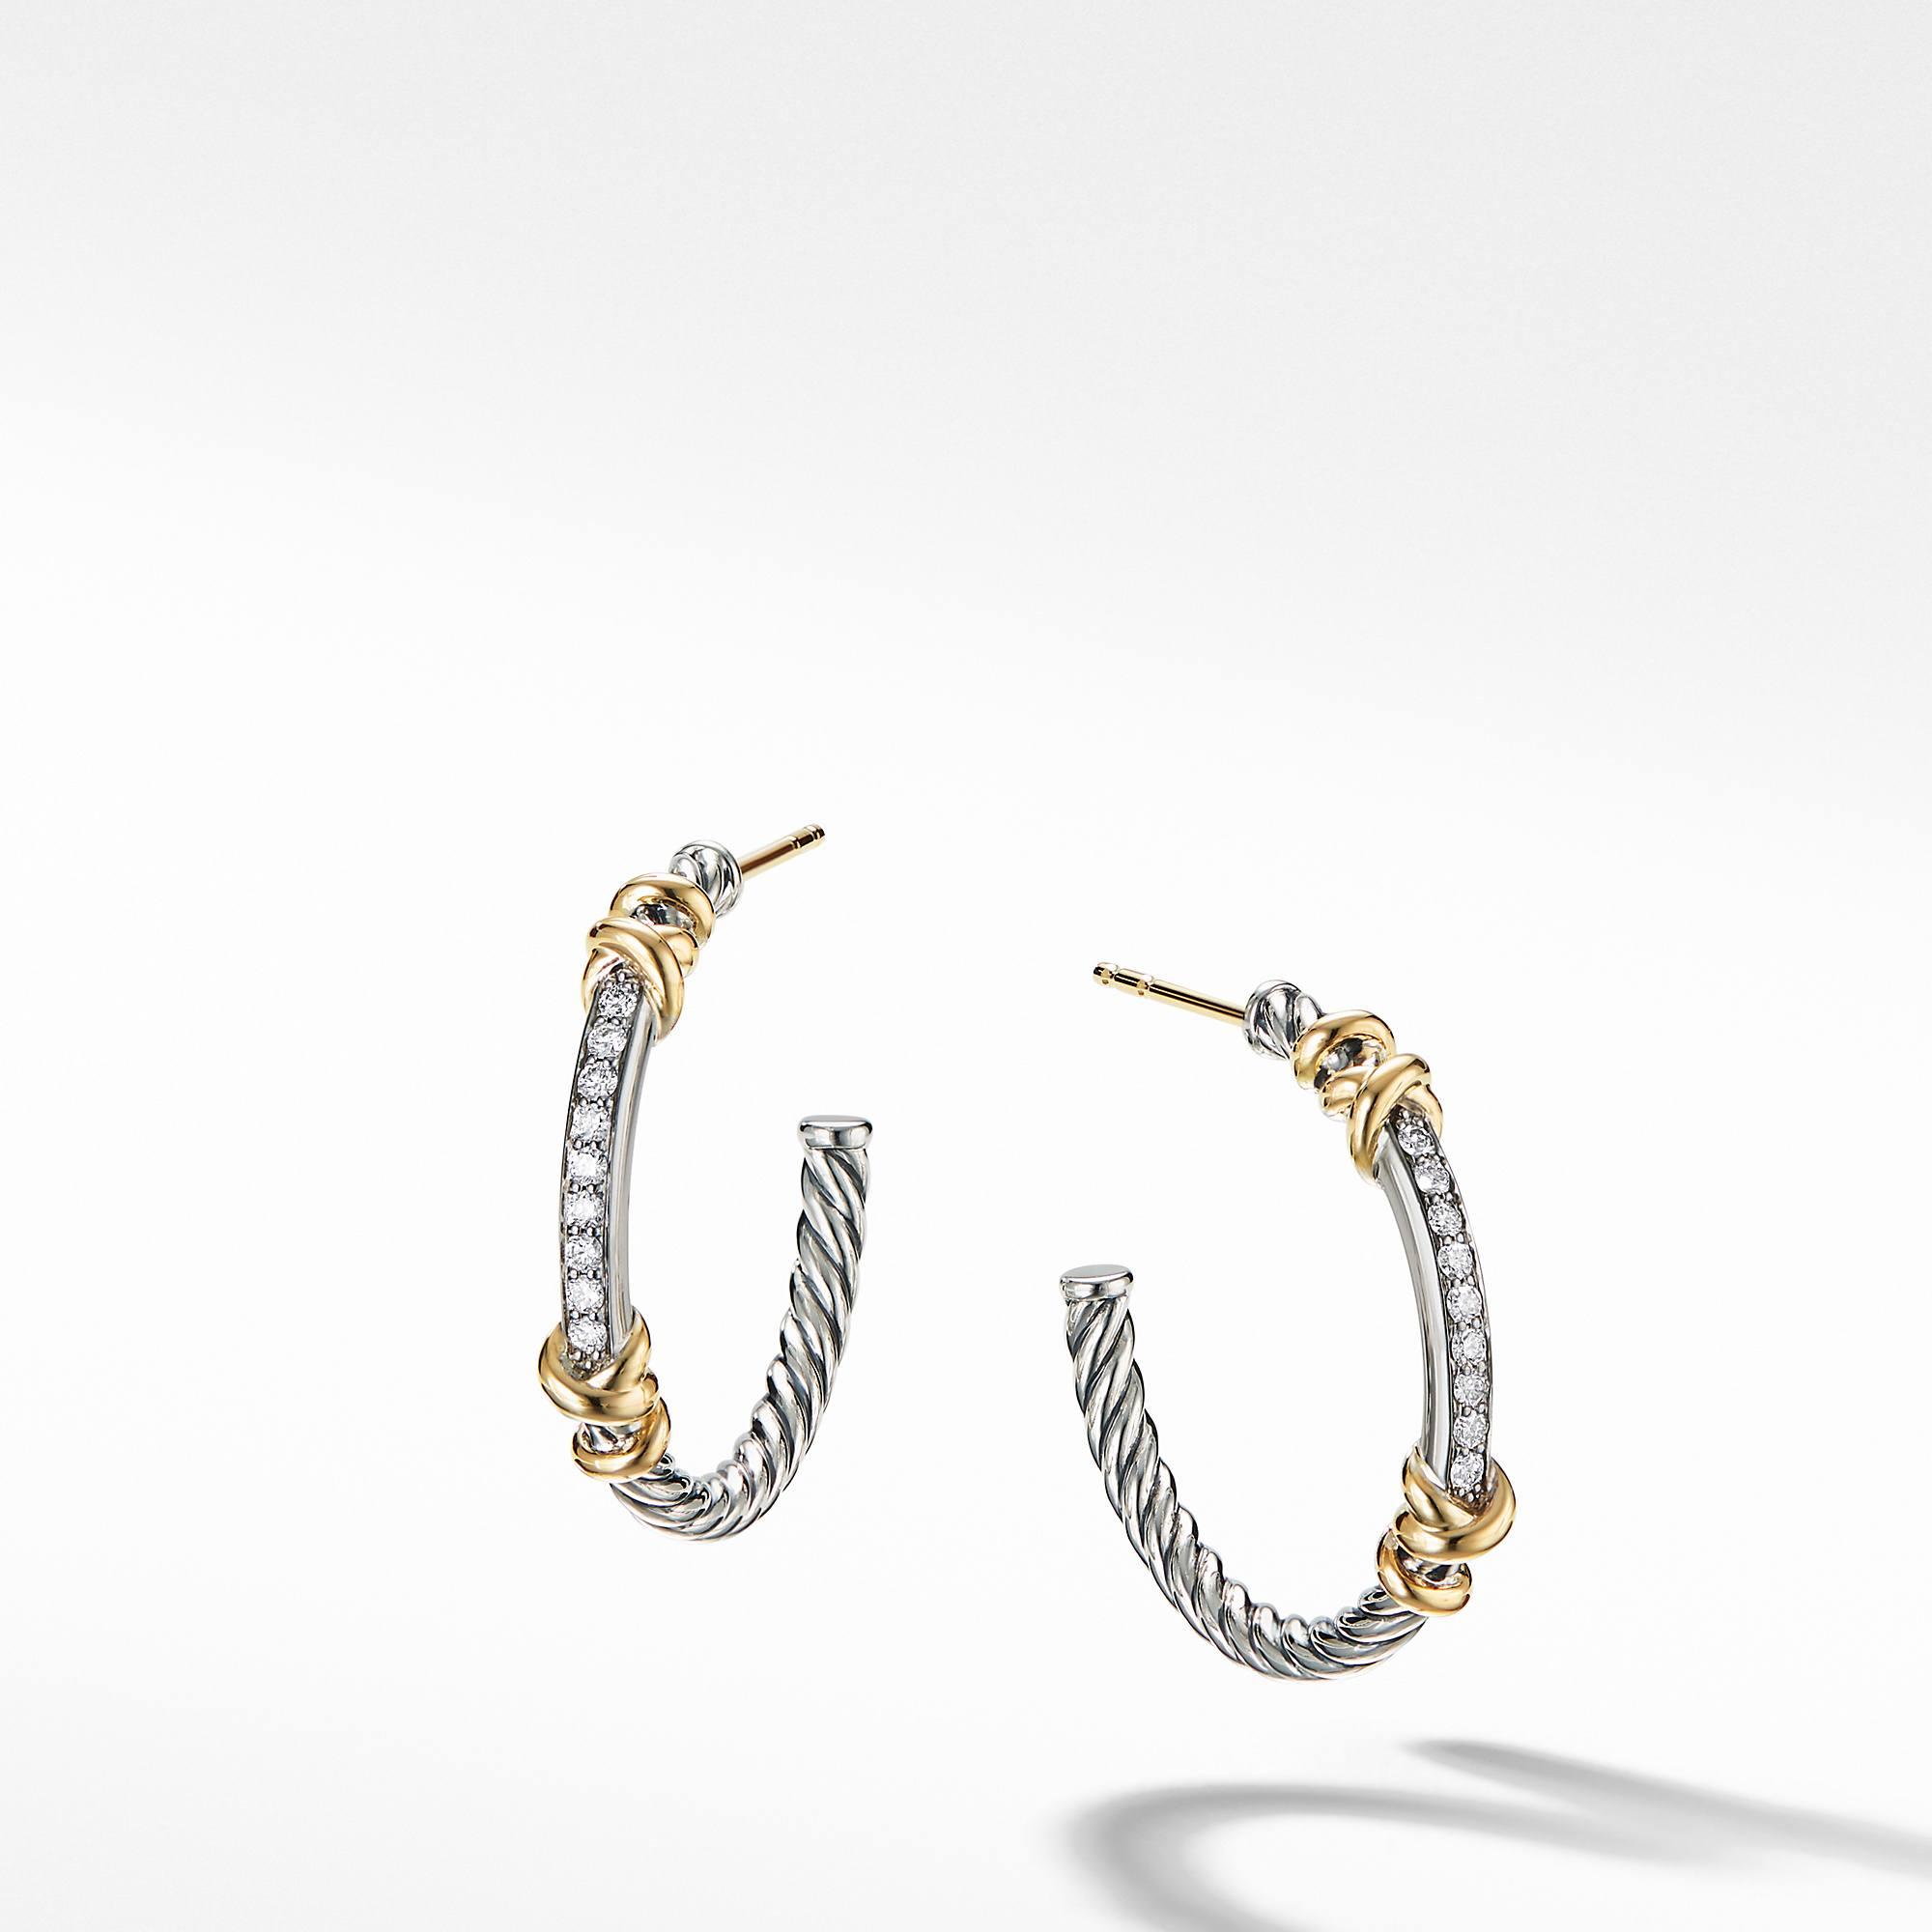 David Yurman Petite Helena Hoop Earrings with 18k Yellow Gold and Diamonds, size medium